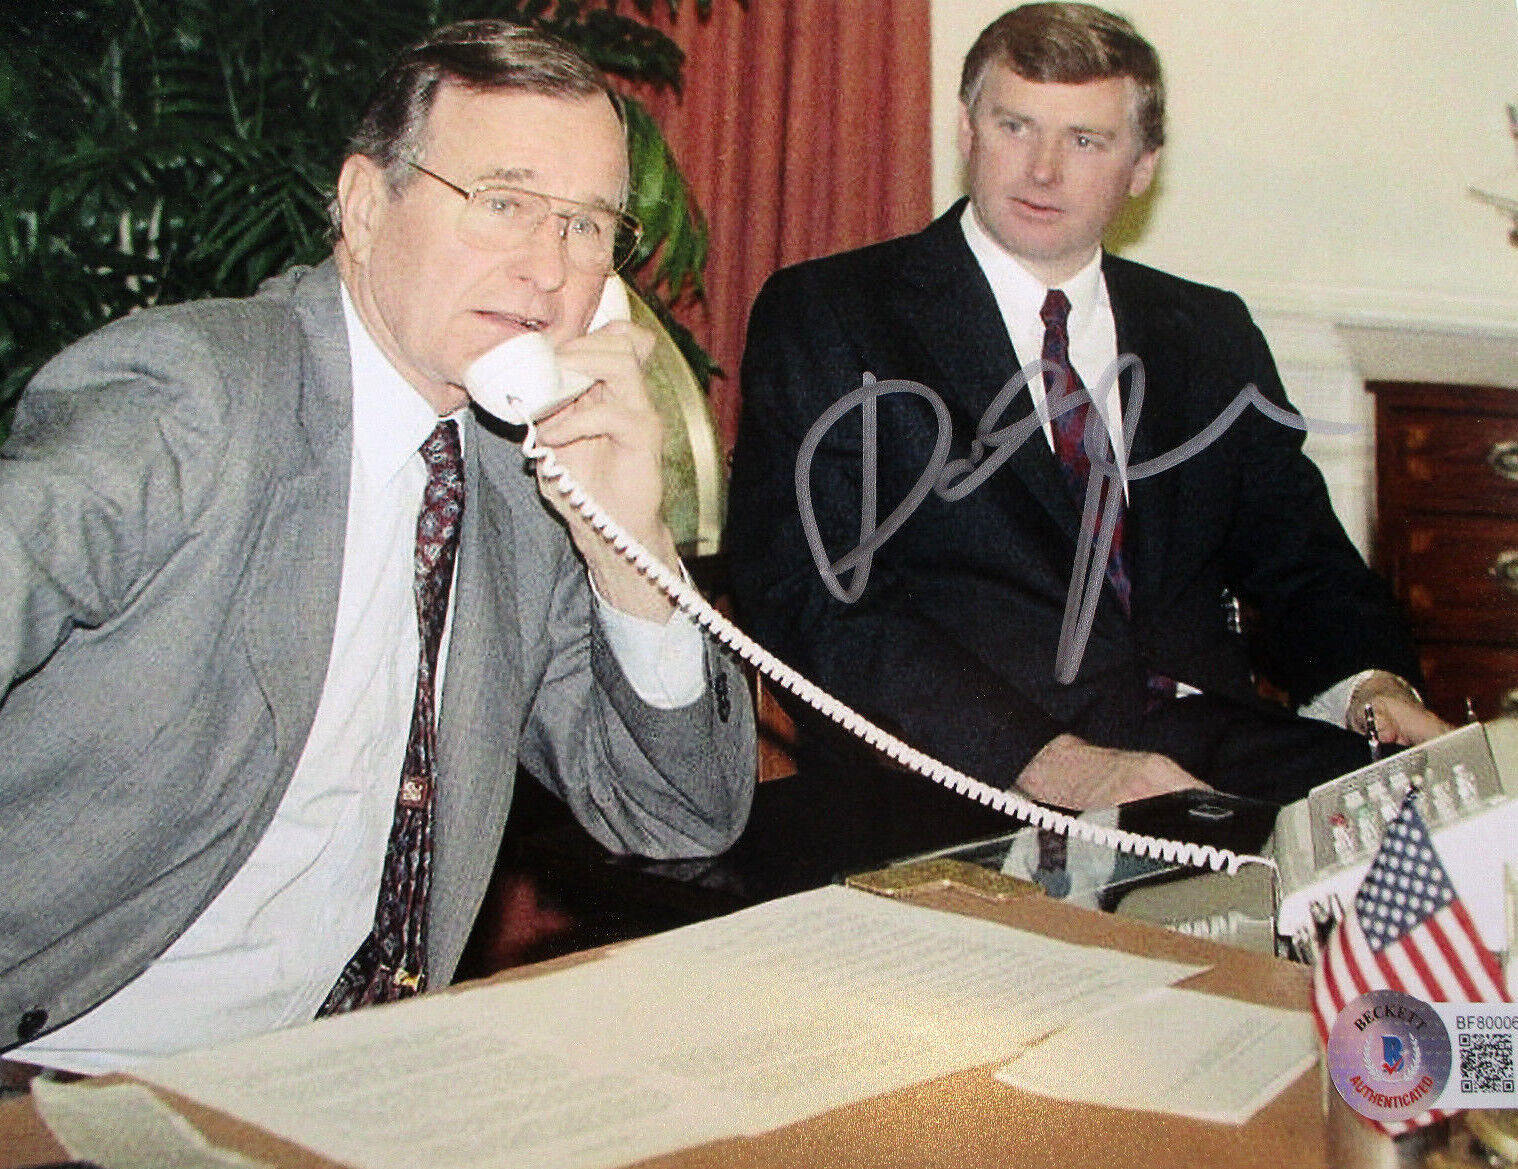 Dan Quayle / Autographed 8x10 Color Photograph with George H.W. Bush / Beckett